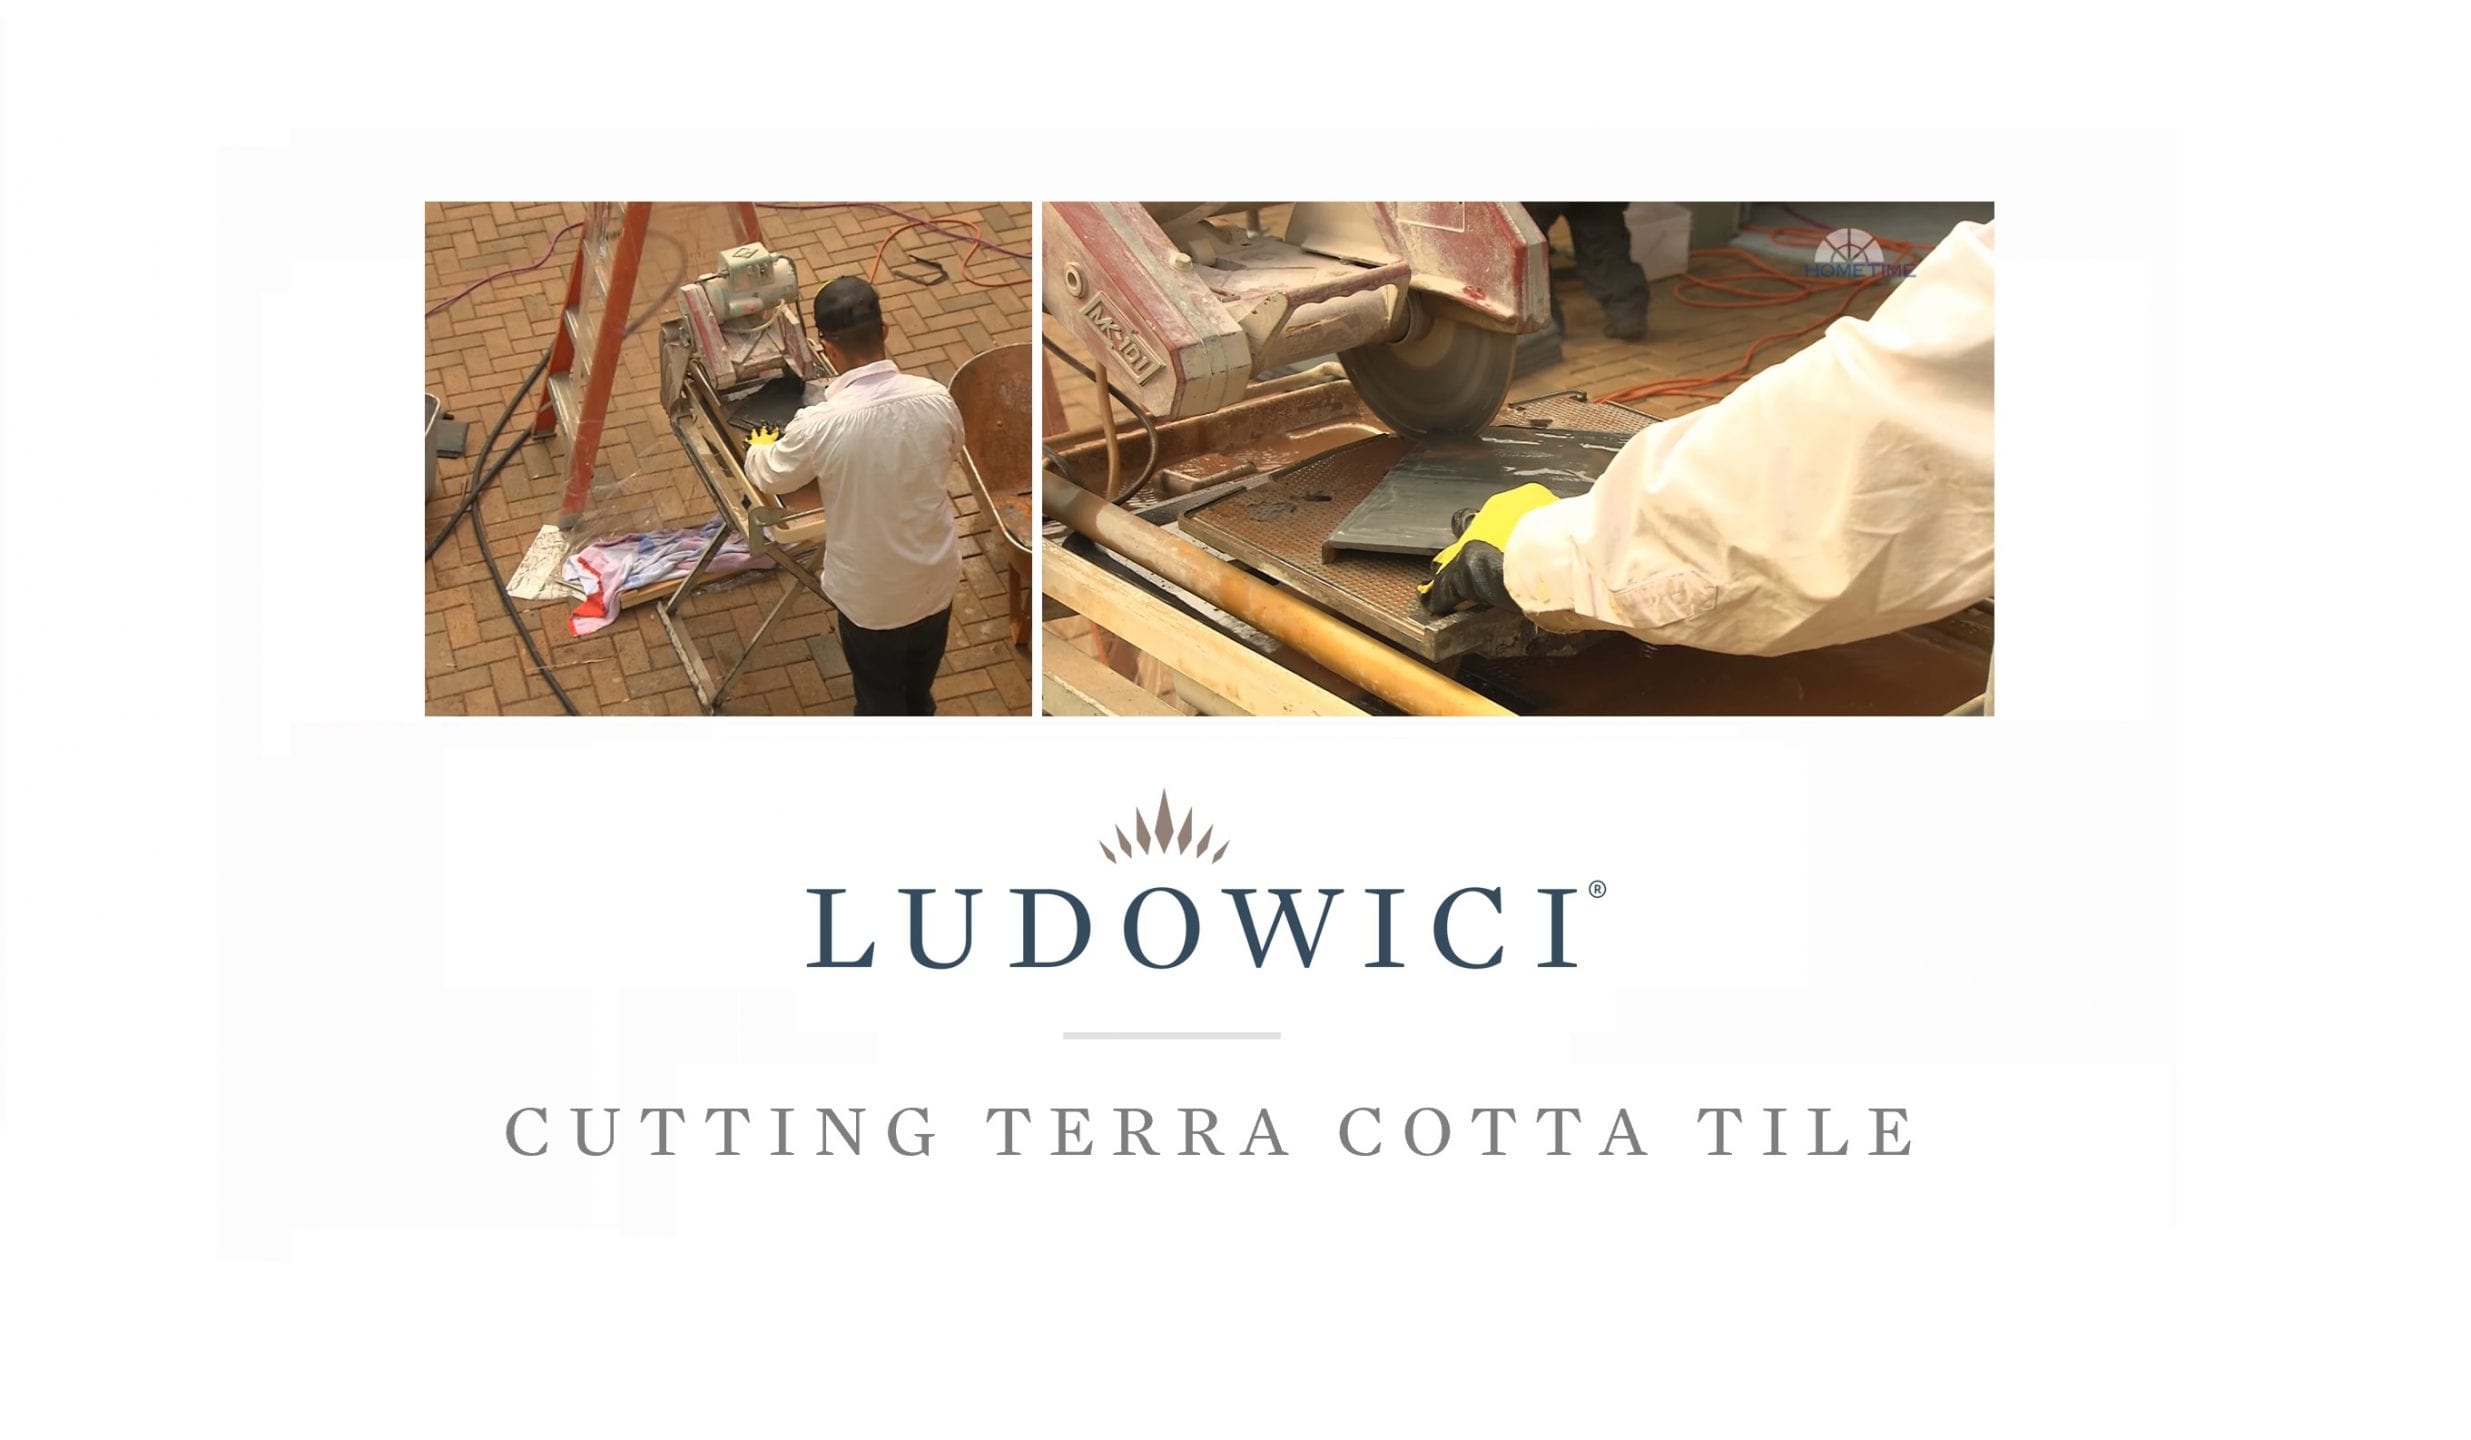 Cutting Terra Cotta Tiles